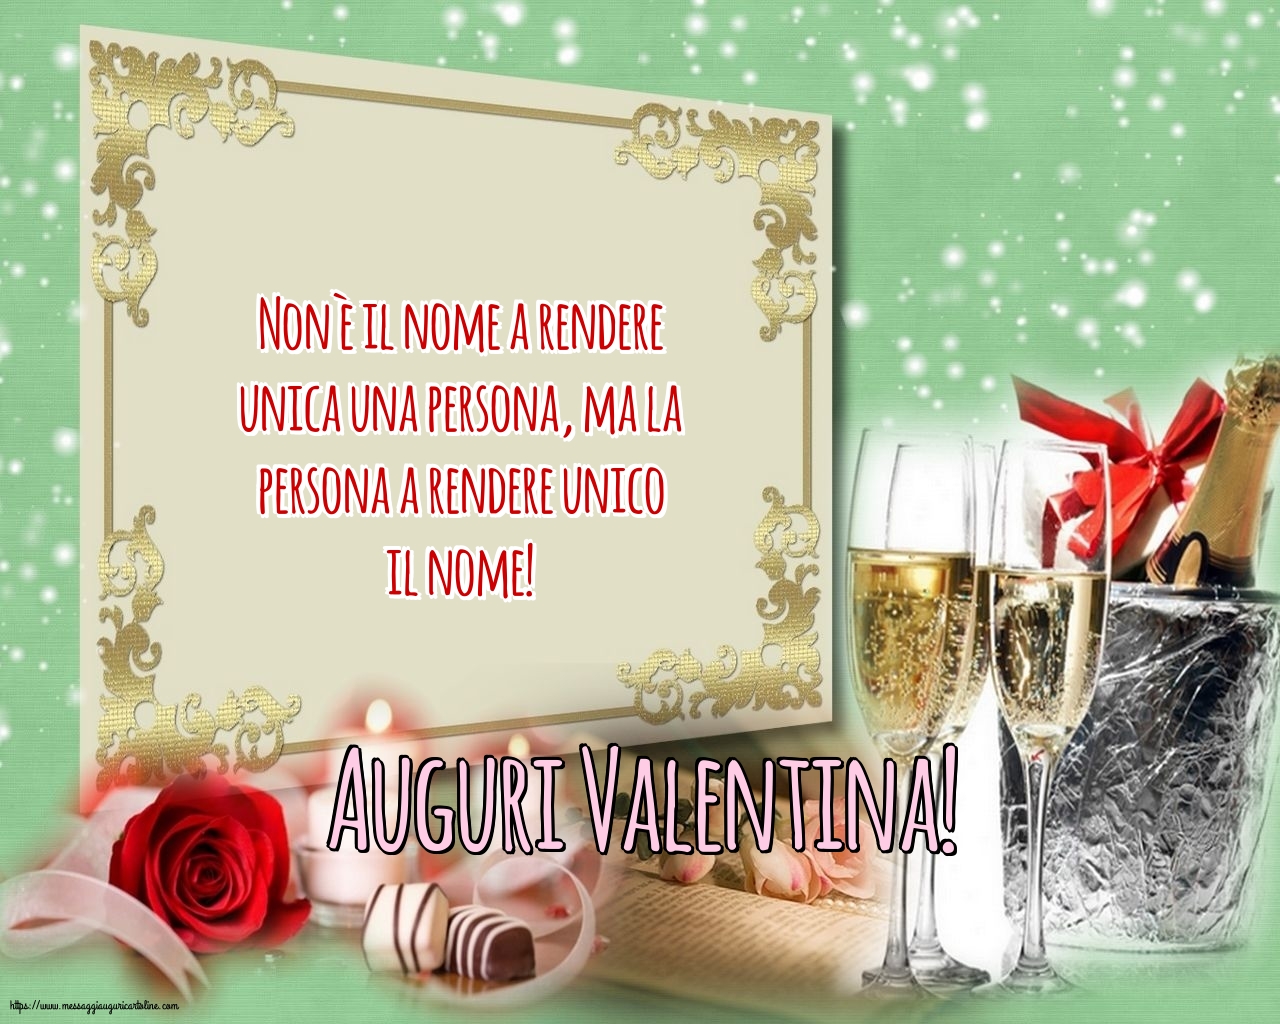 Cartoline di San Valentino - Auguri Valentina! - messaggiauguricartoline.com